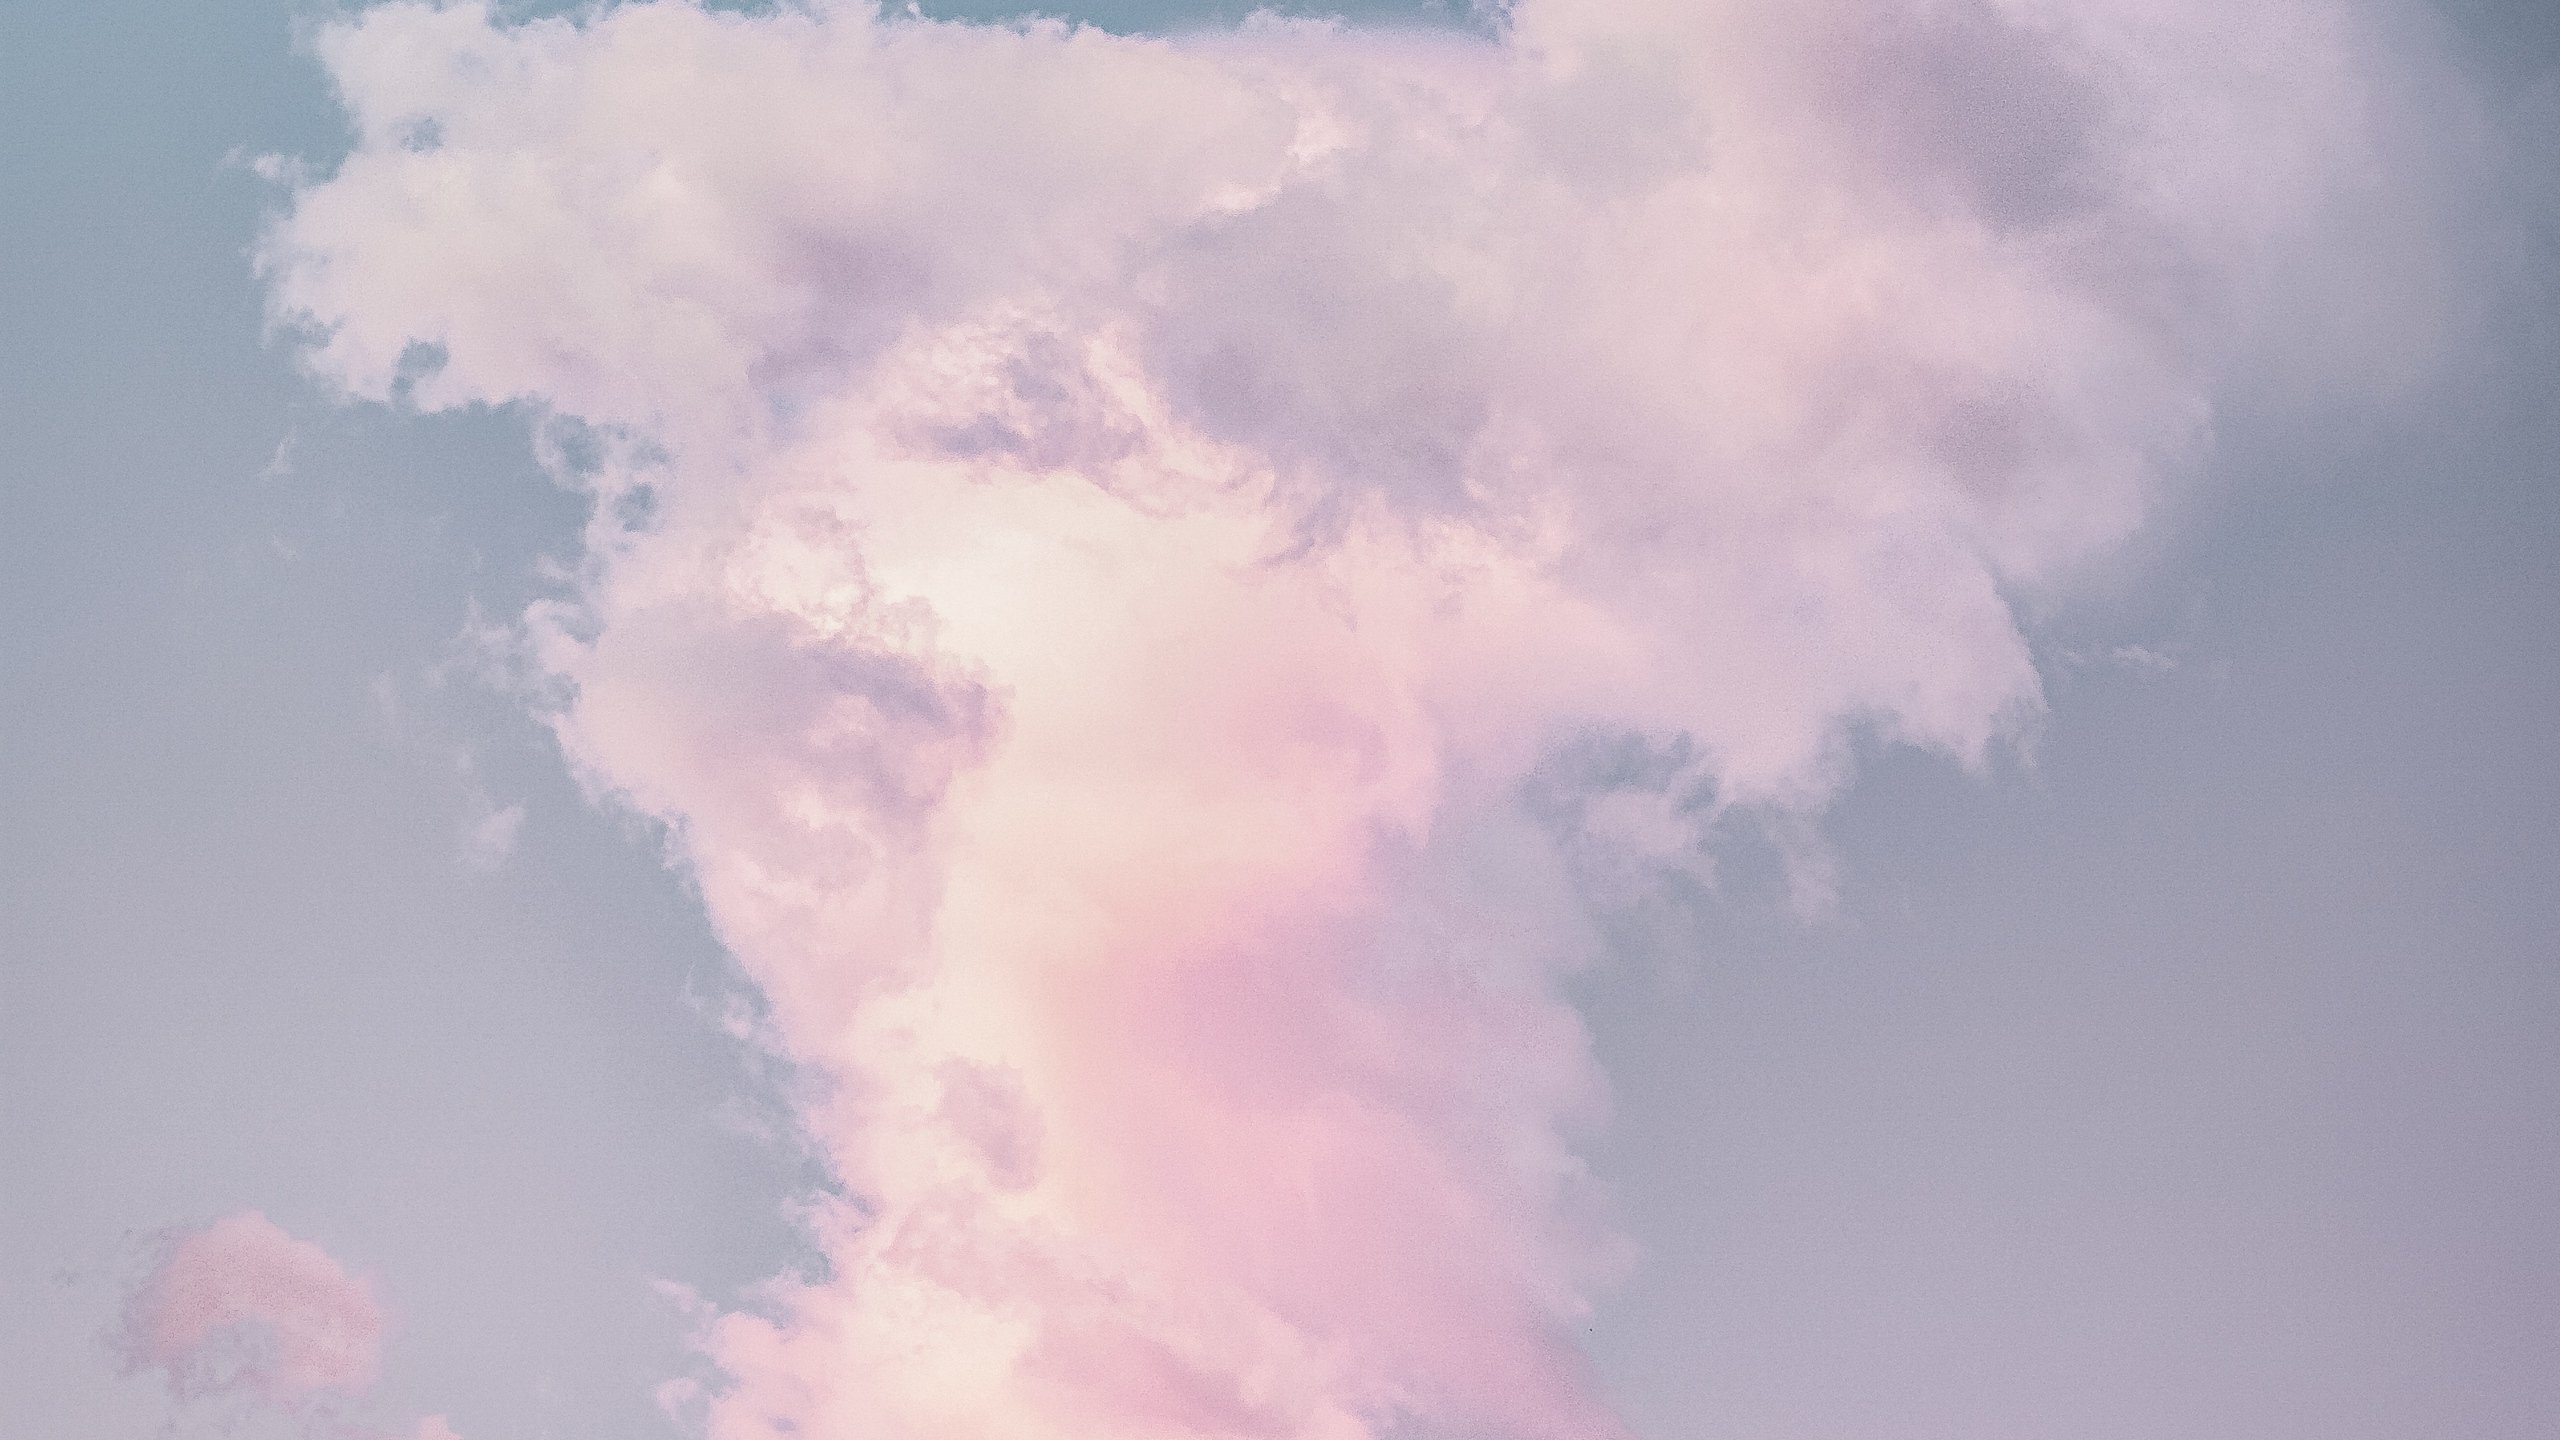 Download wallpaper 2560x1440 clouds, porous, sky, pastel